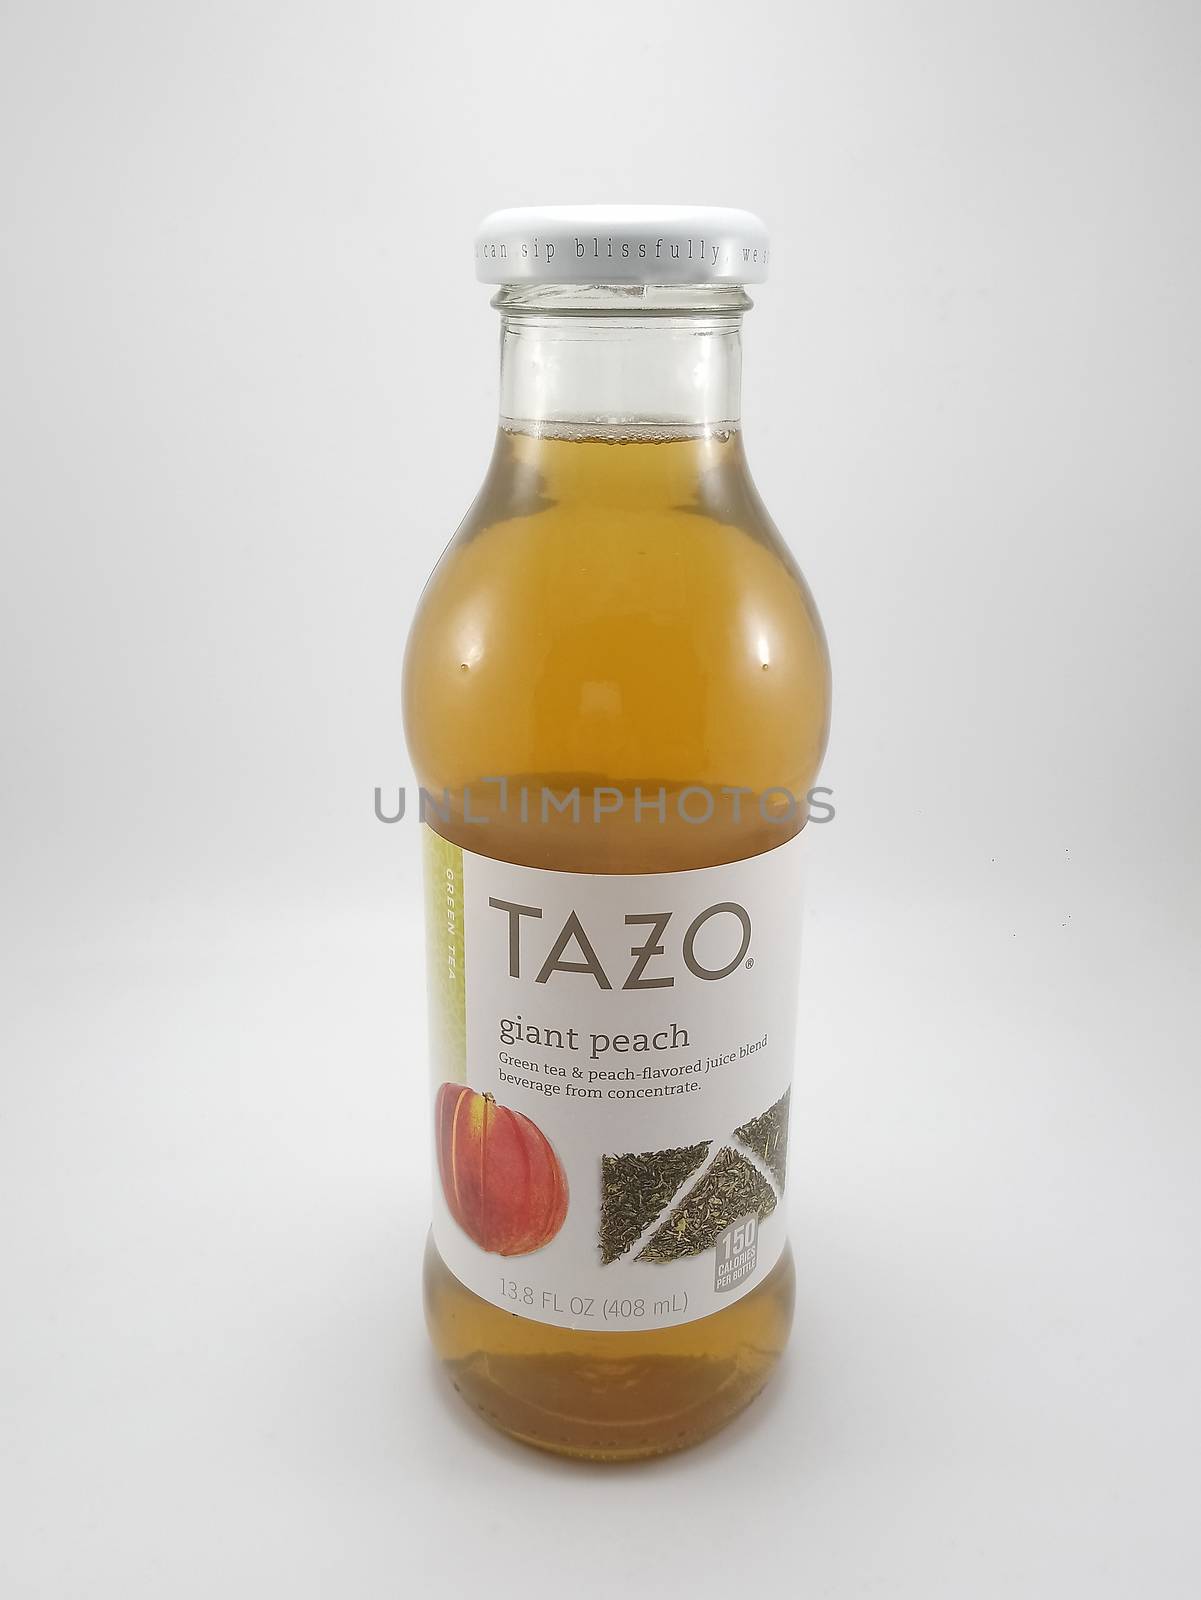 MANILA, PH - SEPT 25 - Tazo giant peach green tea drink on September 25, 2020 in Manila, Philippines.